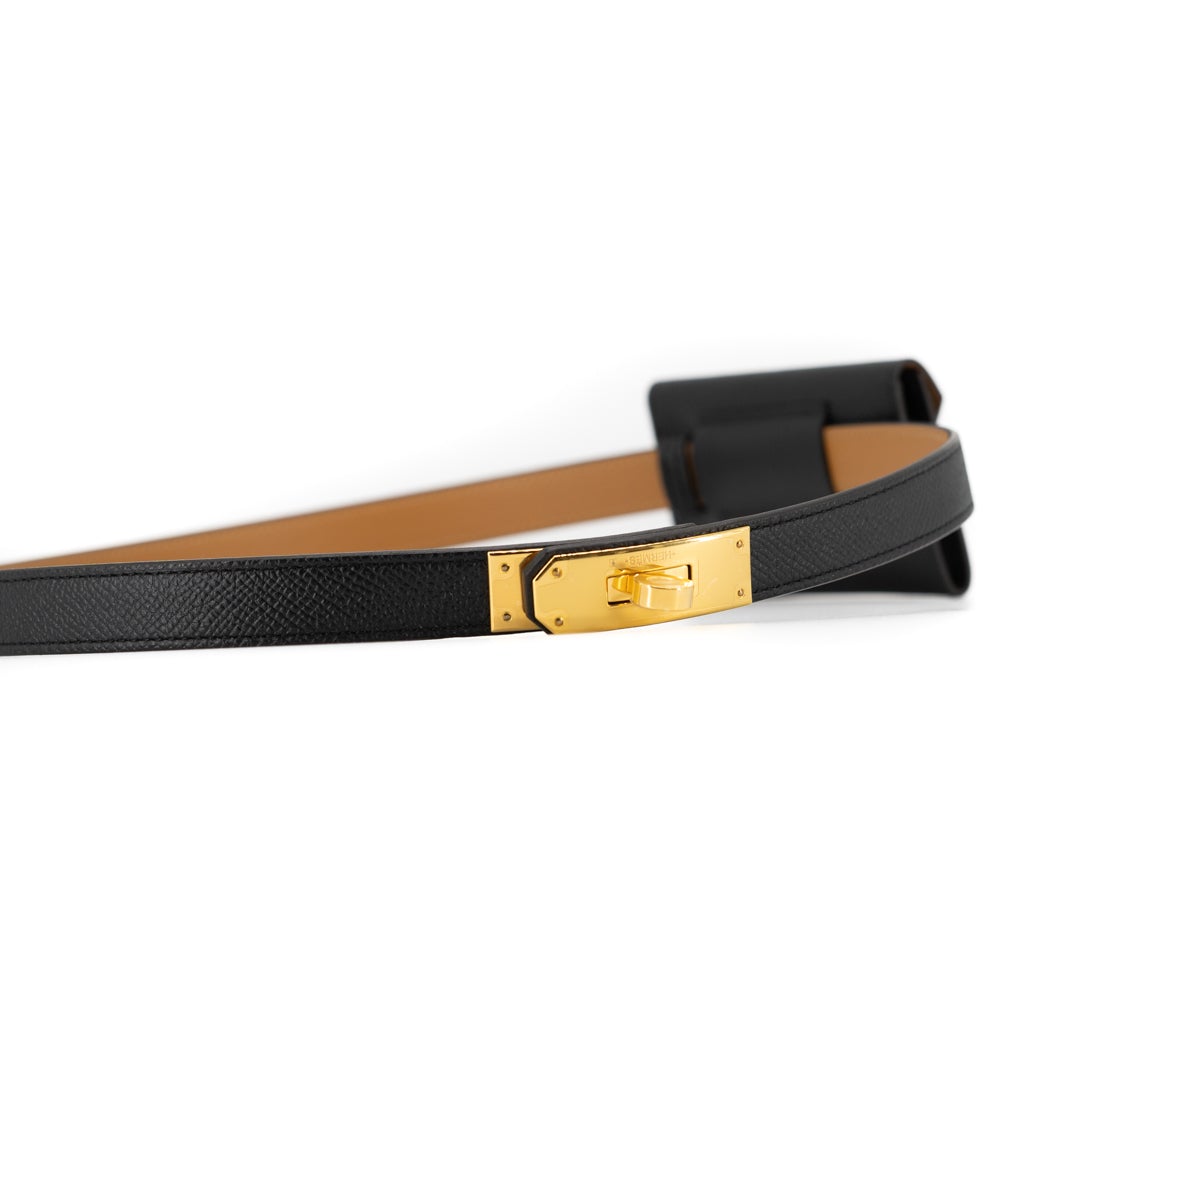 The Hermes Kelly Pocket Belt - Steffy's Style